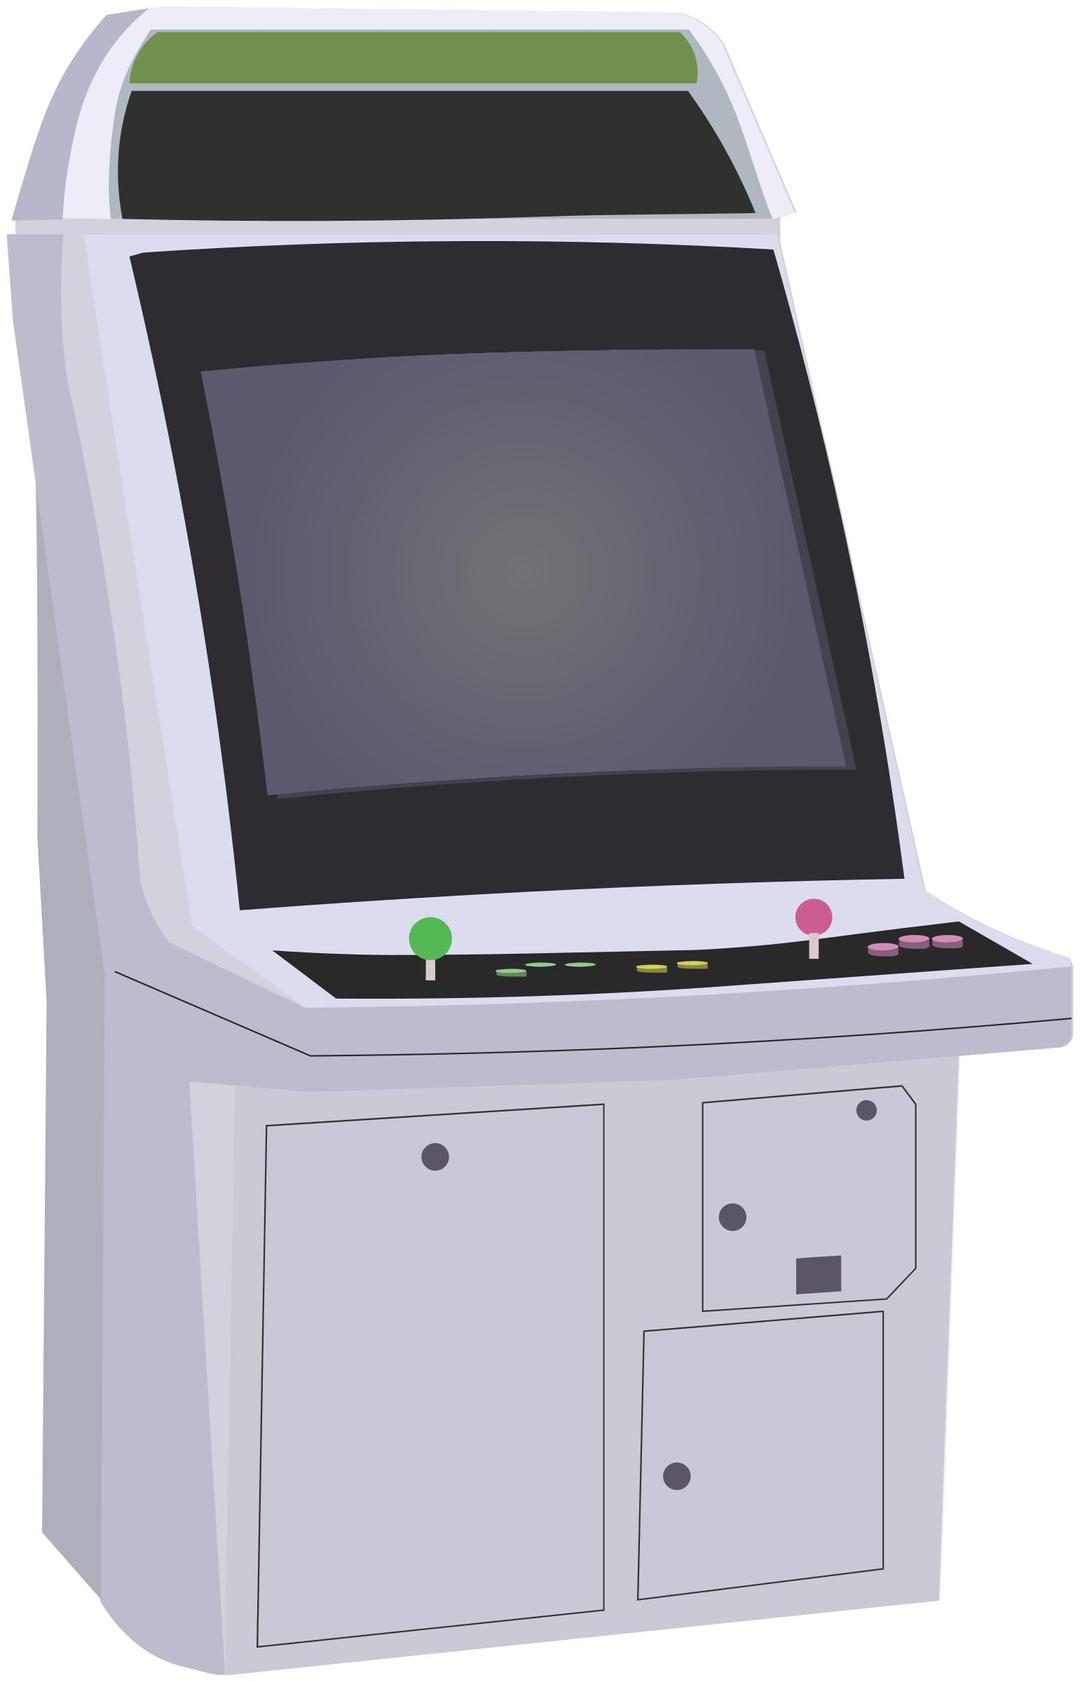 Arcade video game machine png transparent